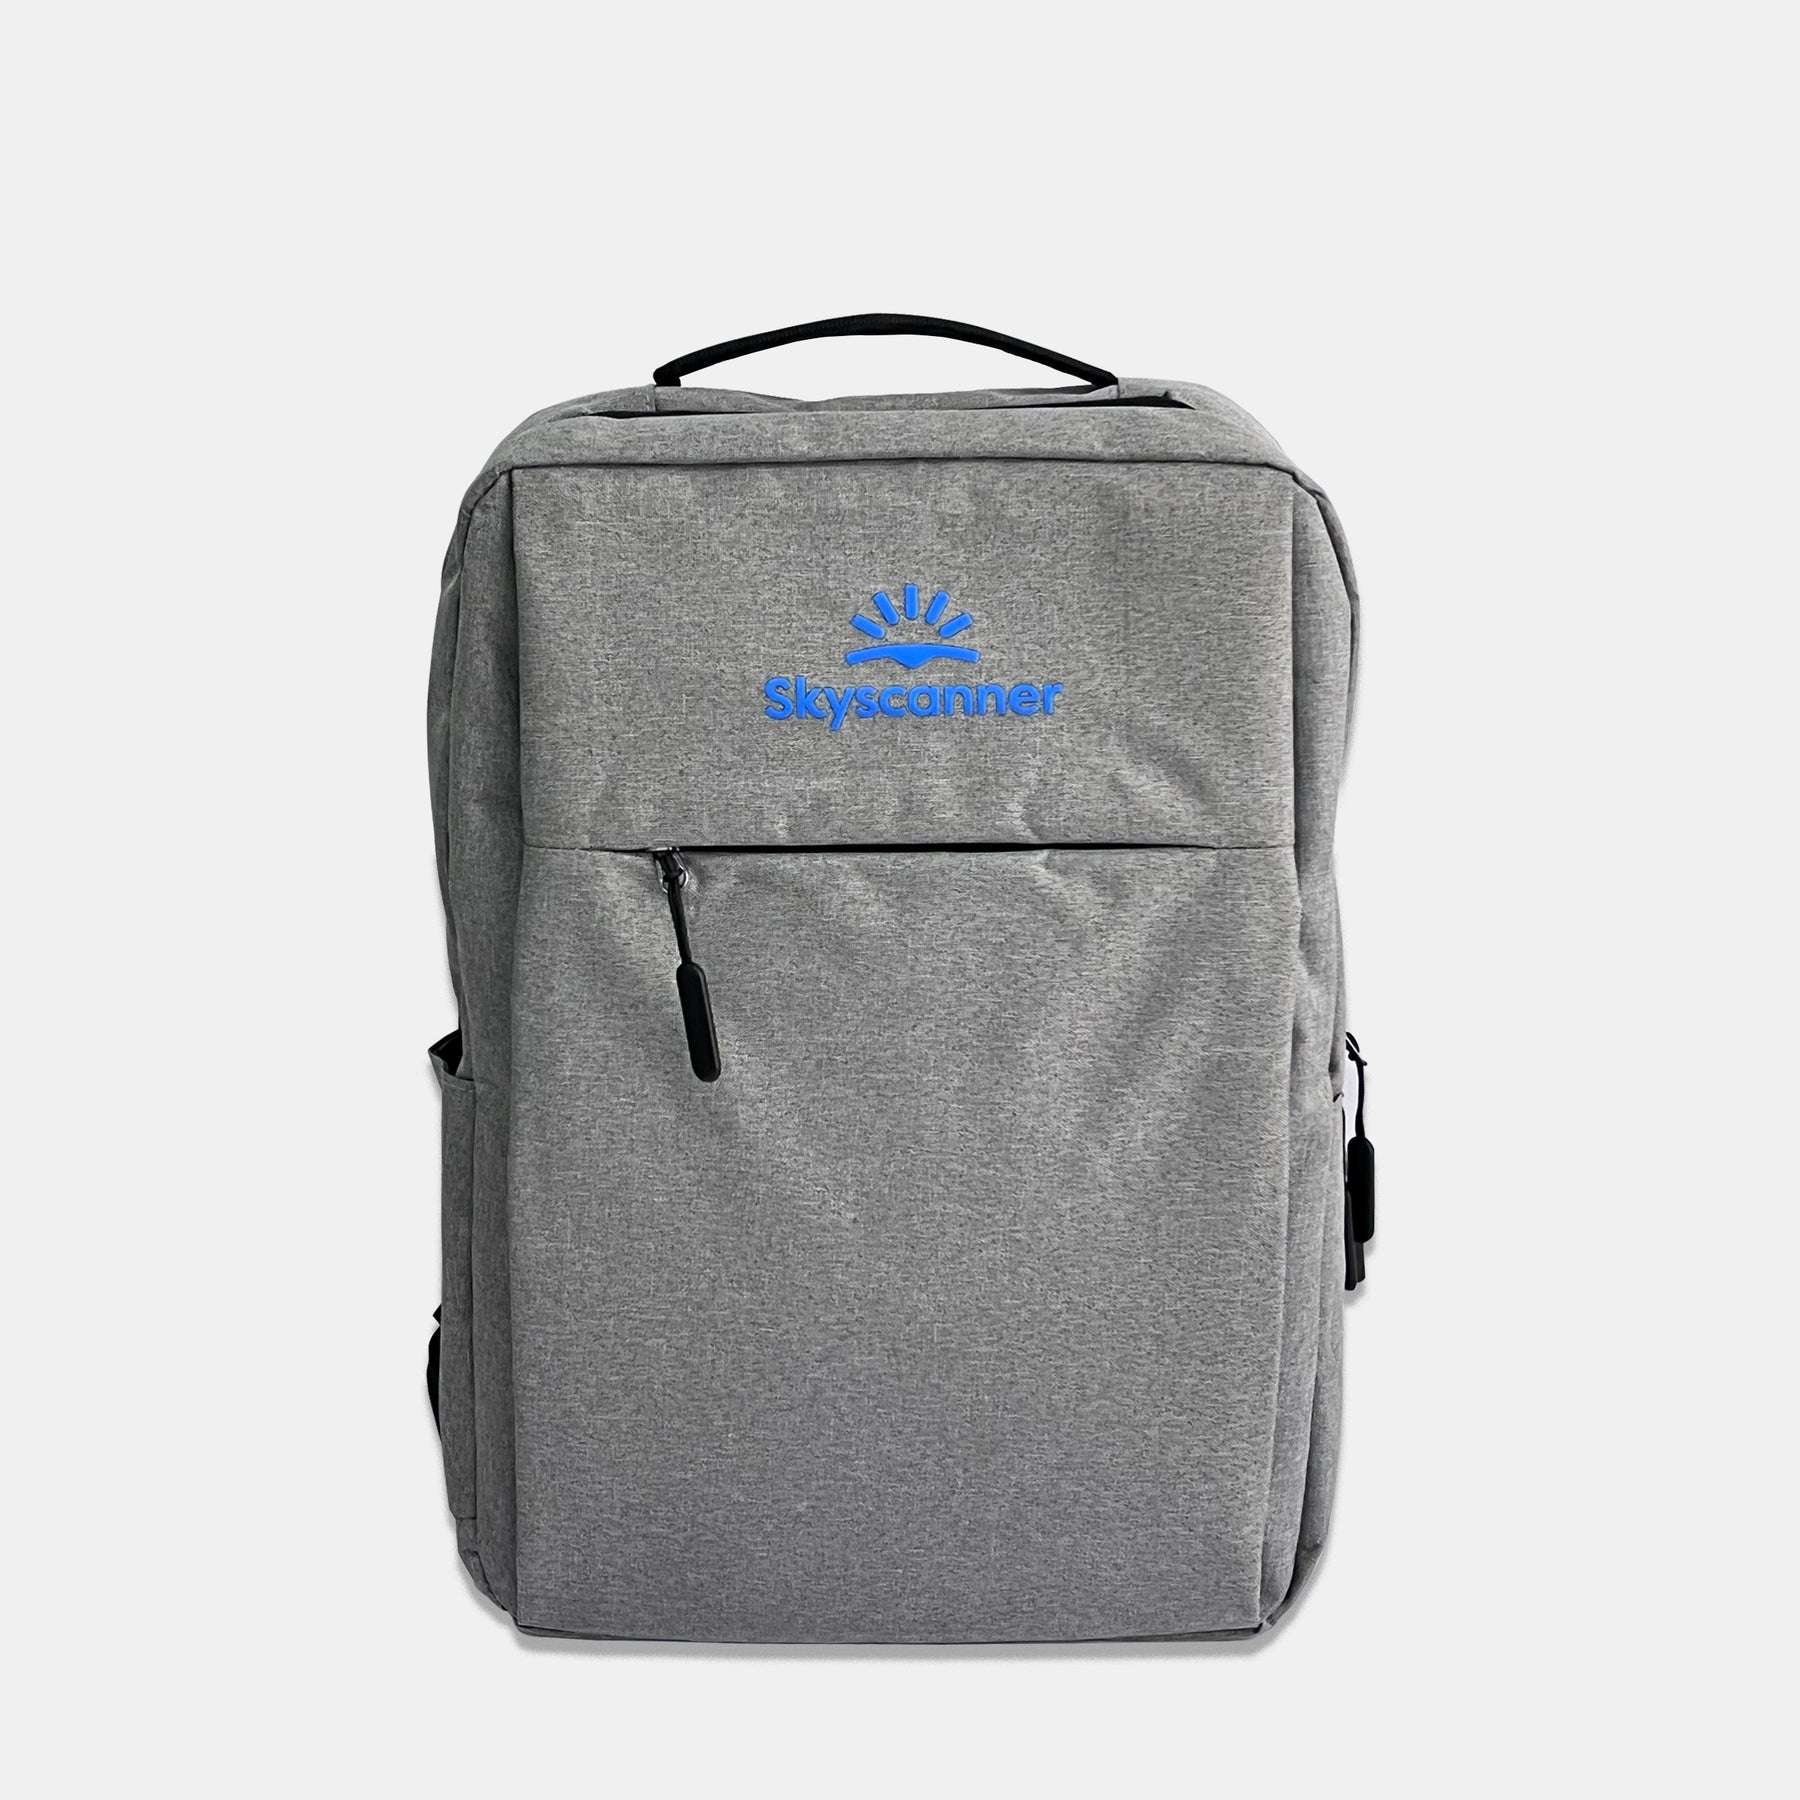 Skyscanner Backpack